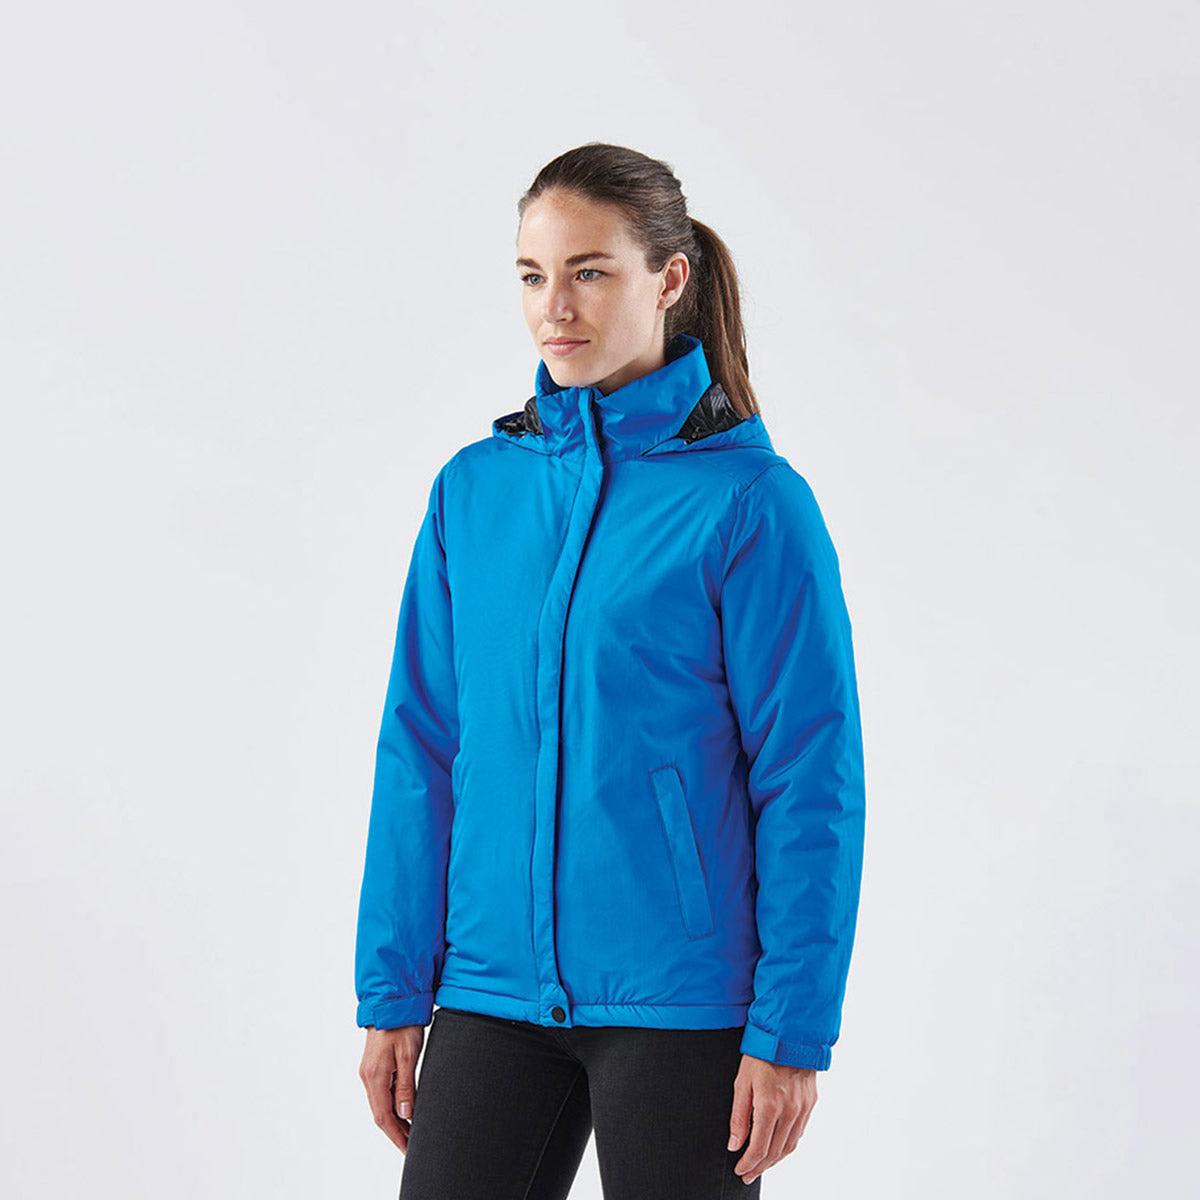 Women's Nautilus 3-in-1 Jacket - Stormtech Canada Retail